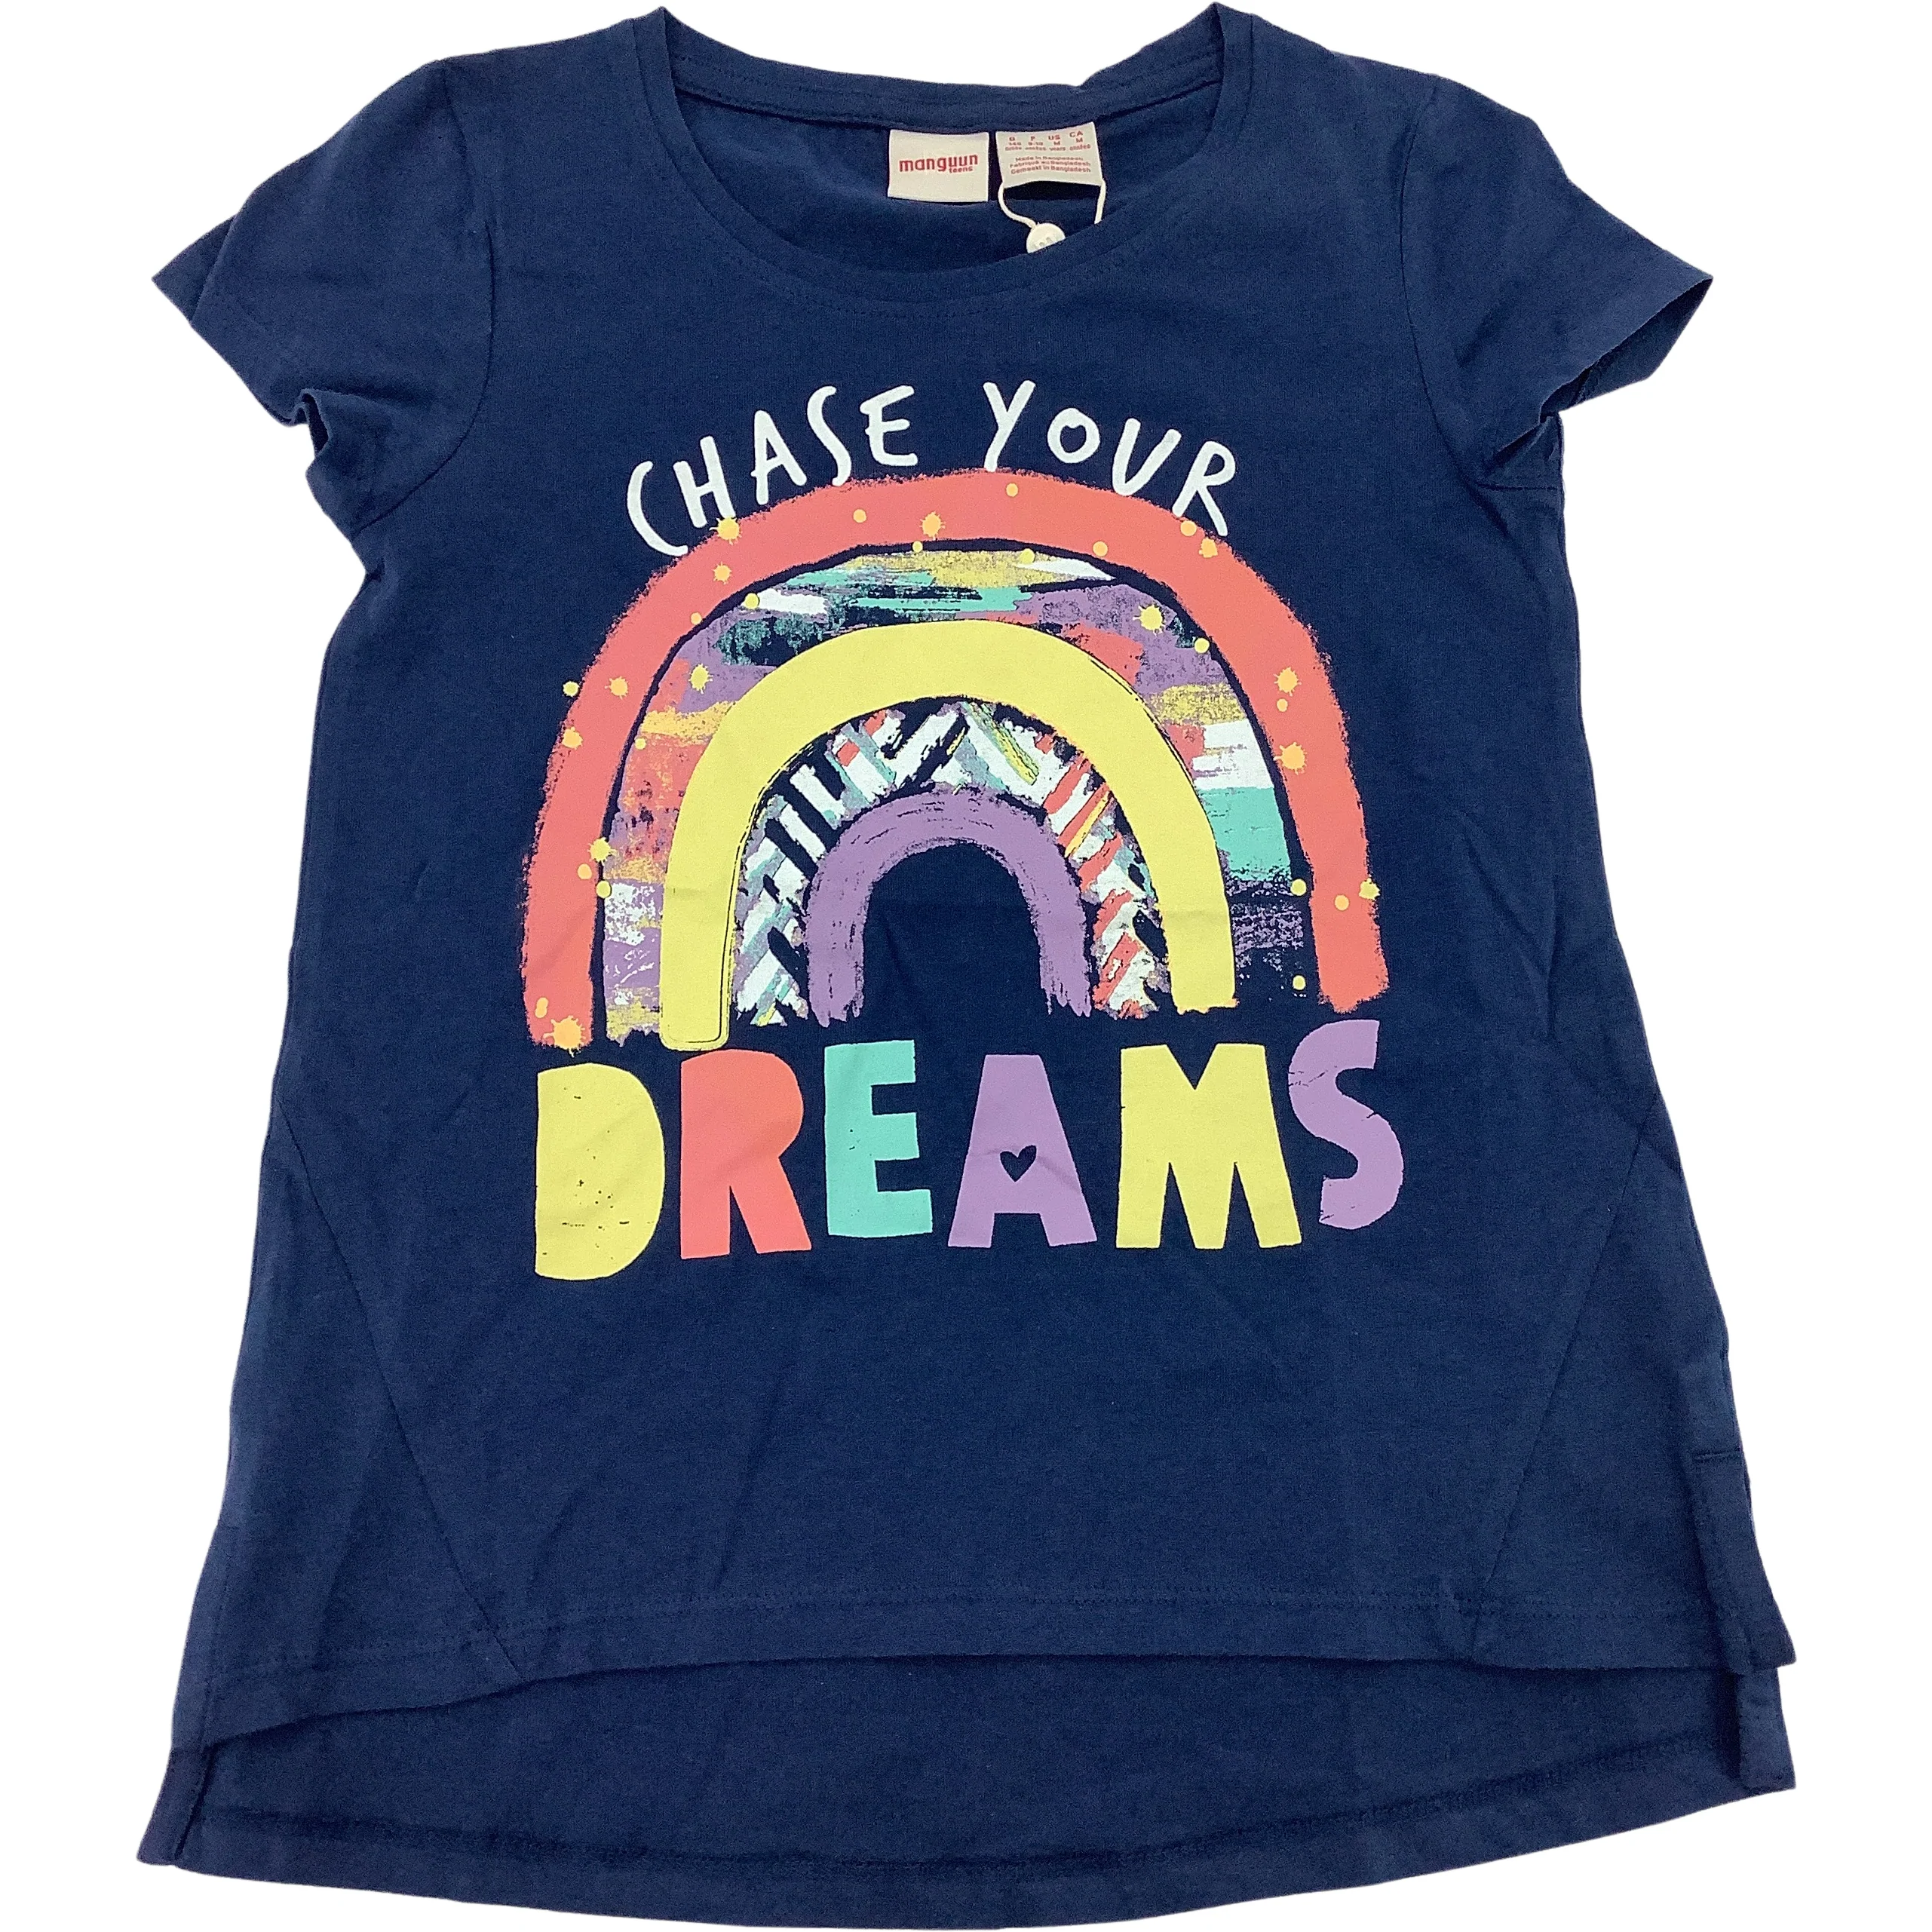 Manguun Girl's T-Shirt / Blue / Rainbow / Dreams / Kid's Summer Clothes / Various Sizes